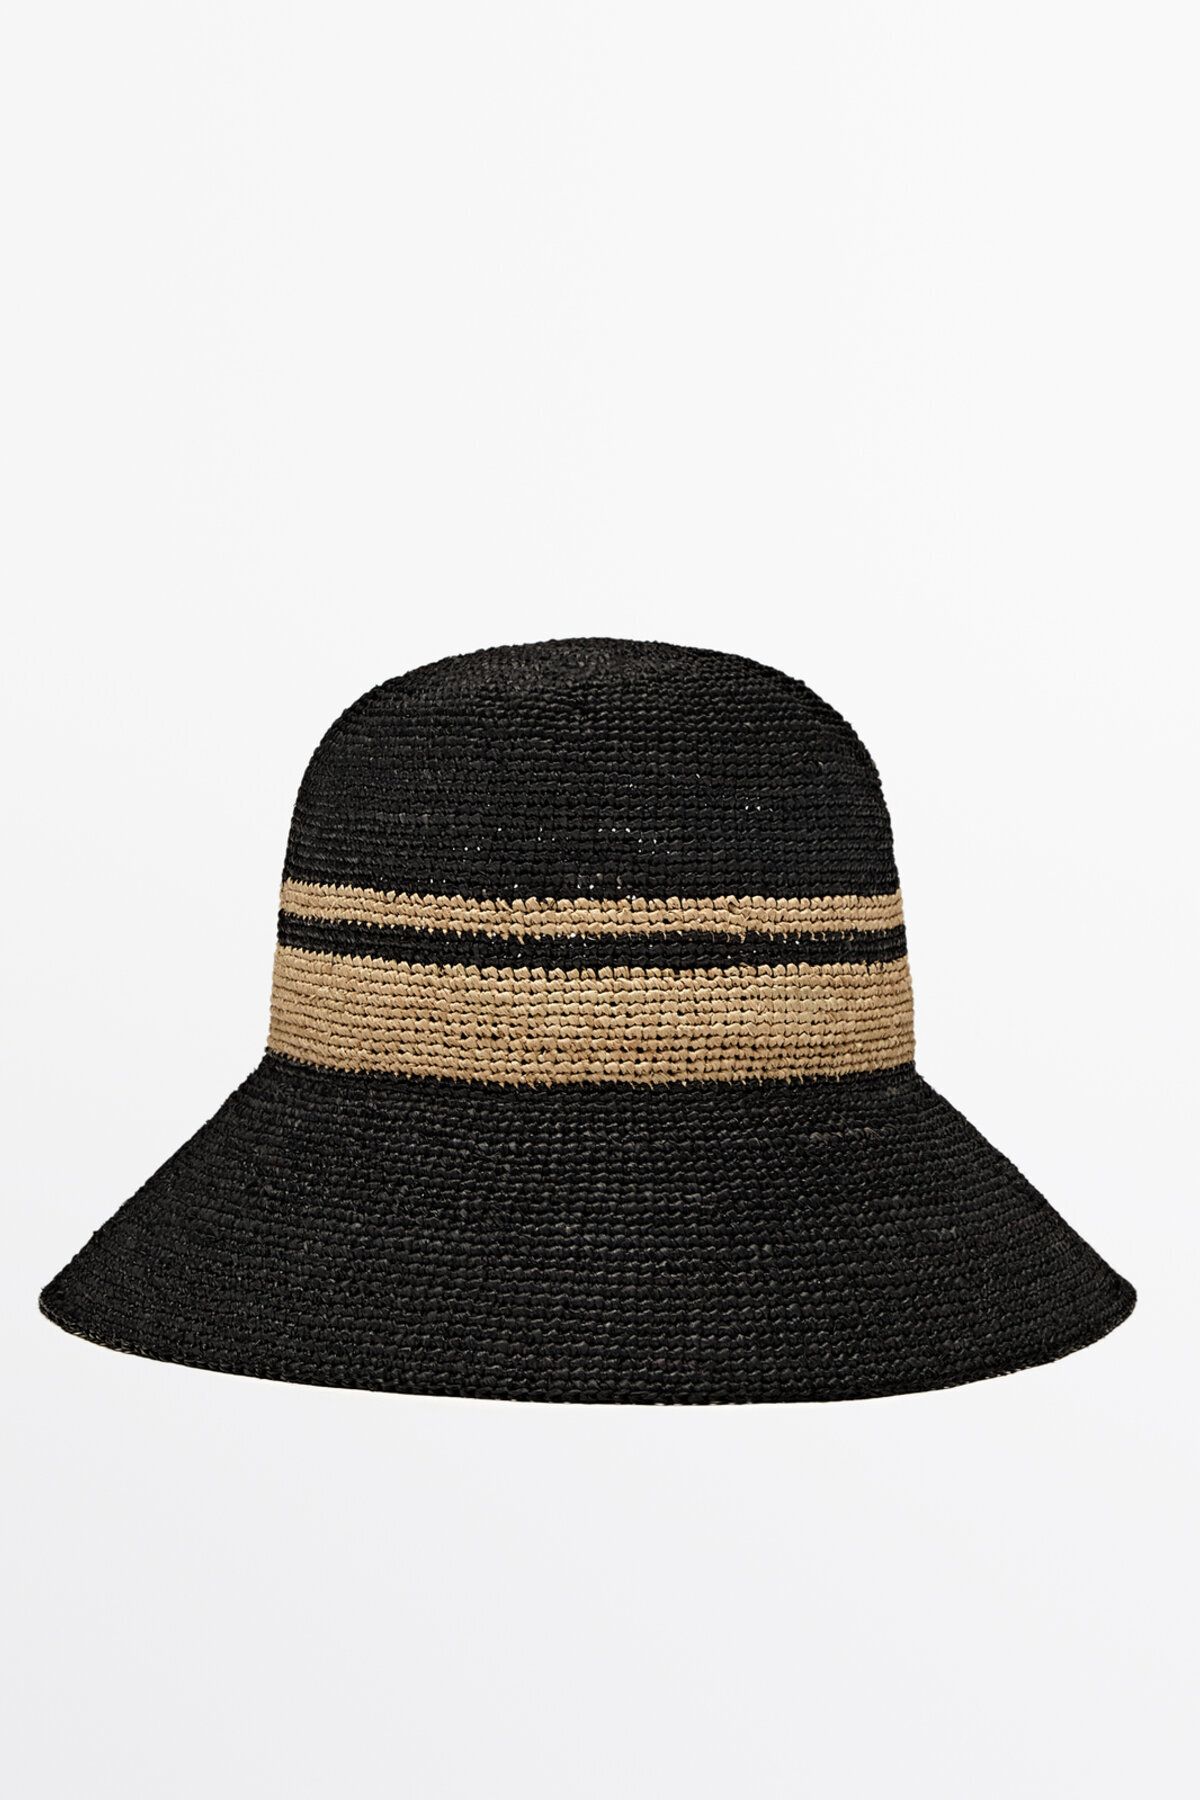 Massimo Dutti Kontrast hasır şapka